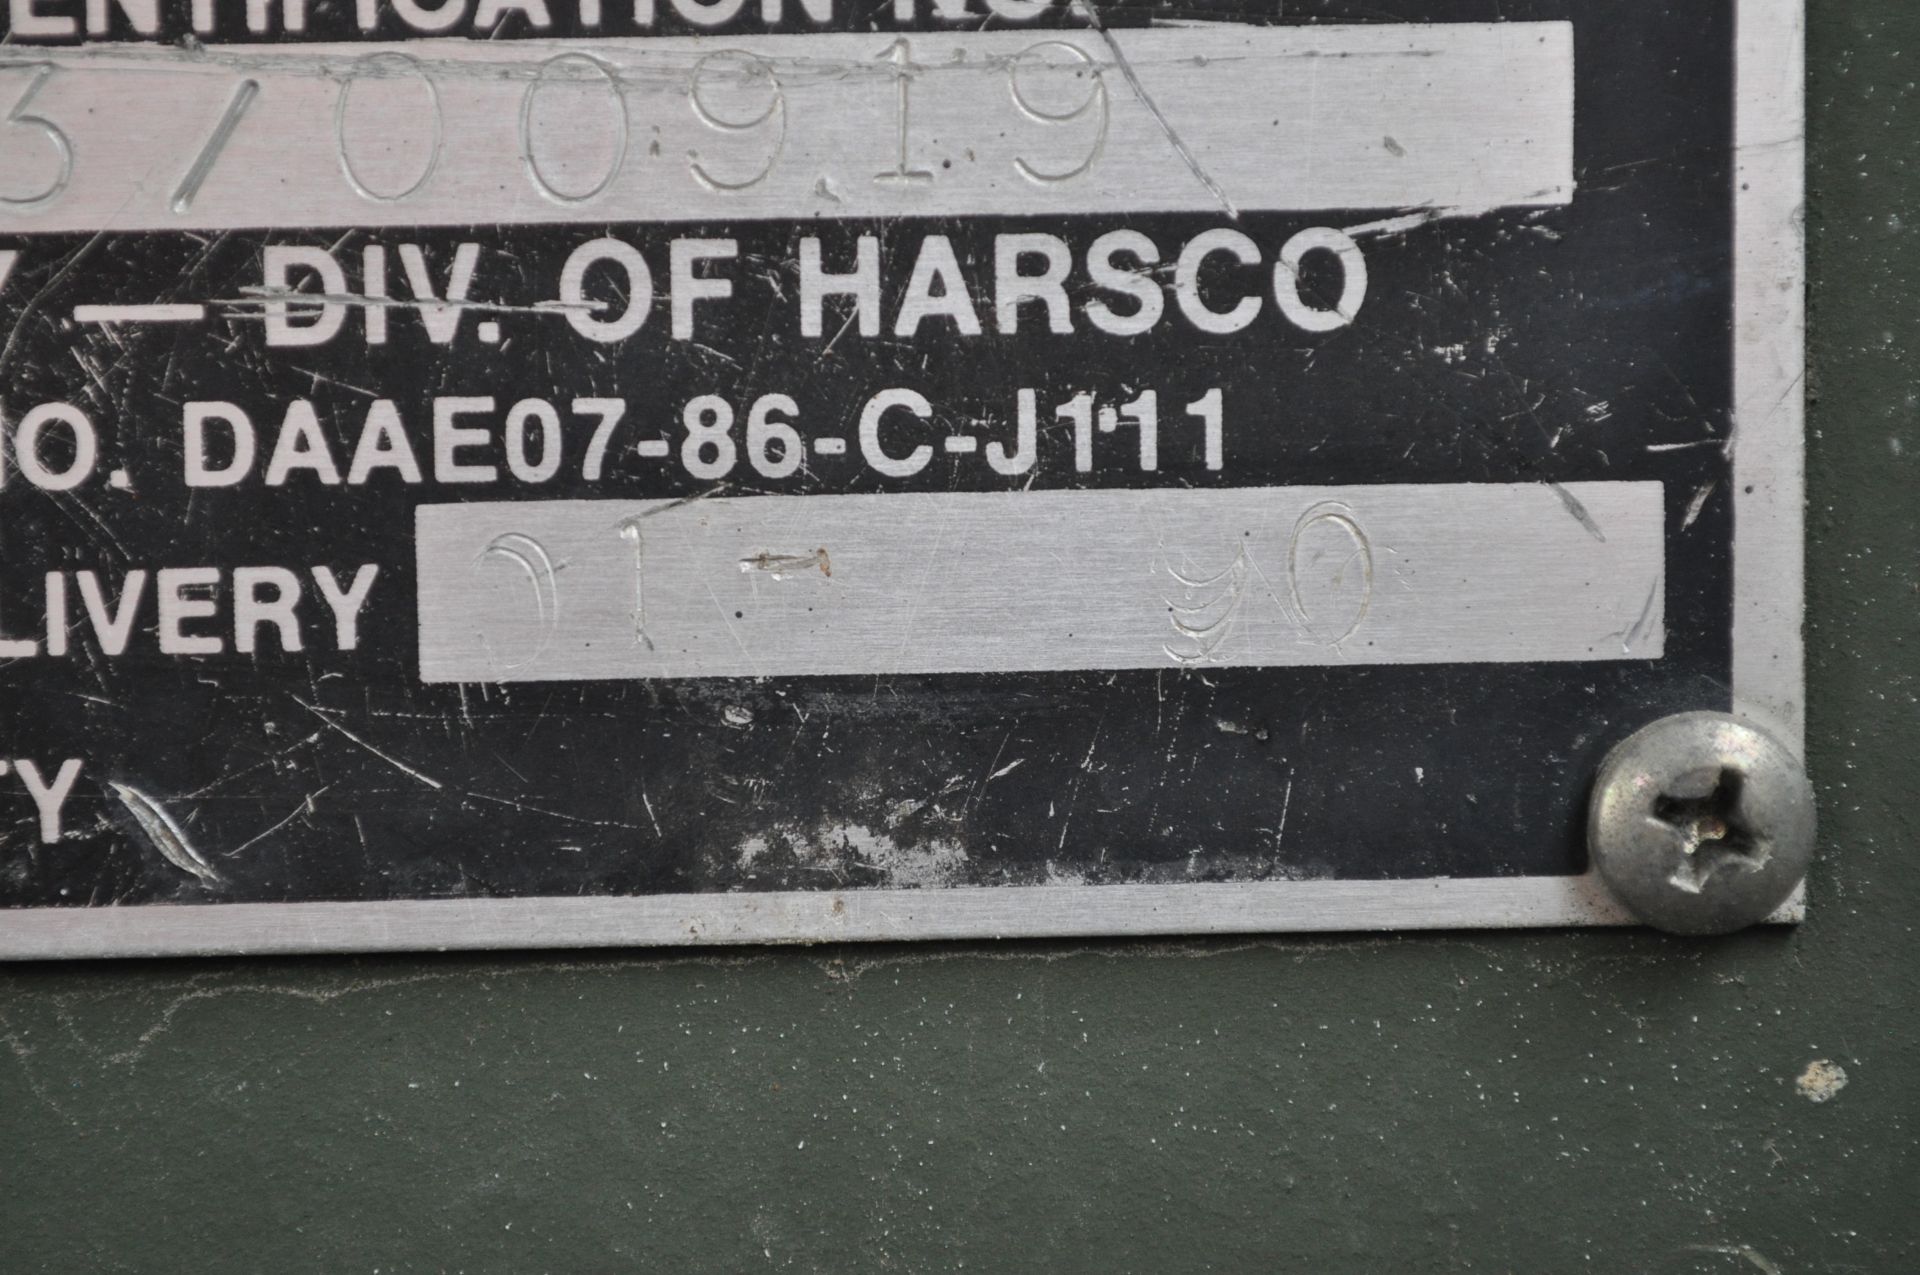 Harsco 5 Ton 6x6 military truck - Image 26 of 31